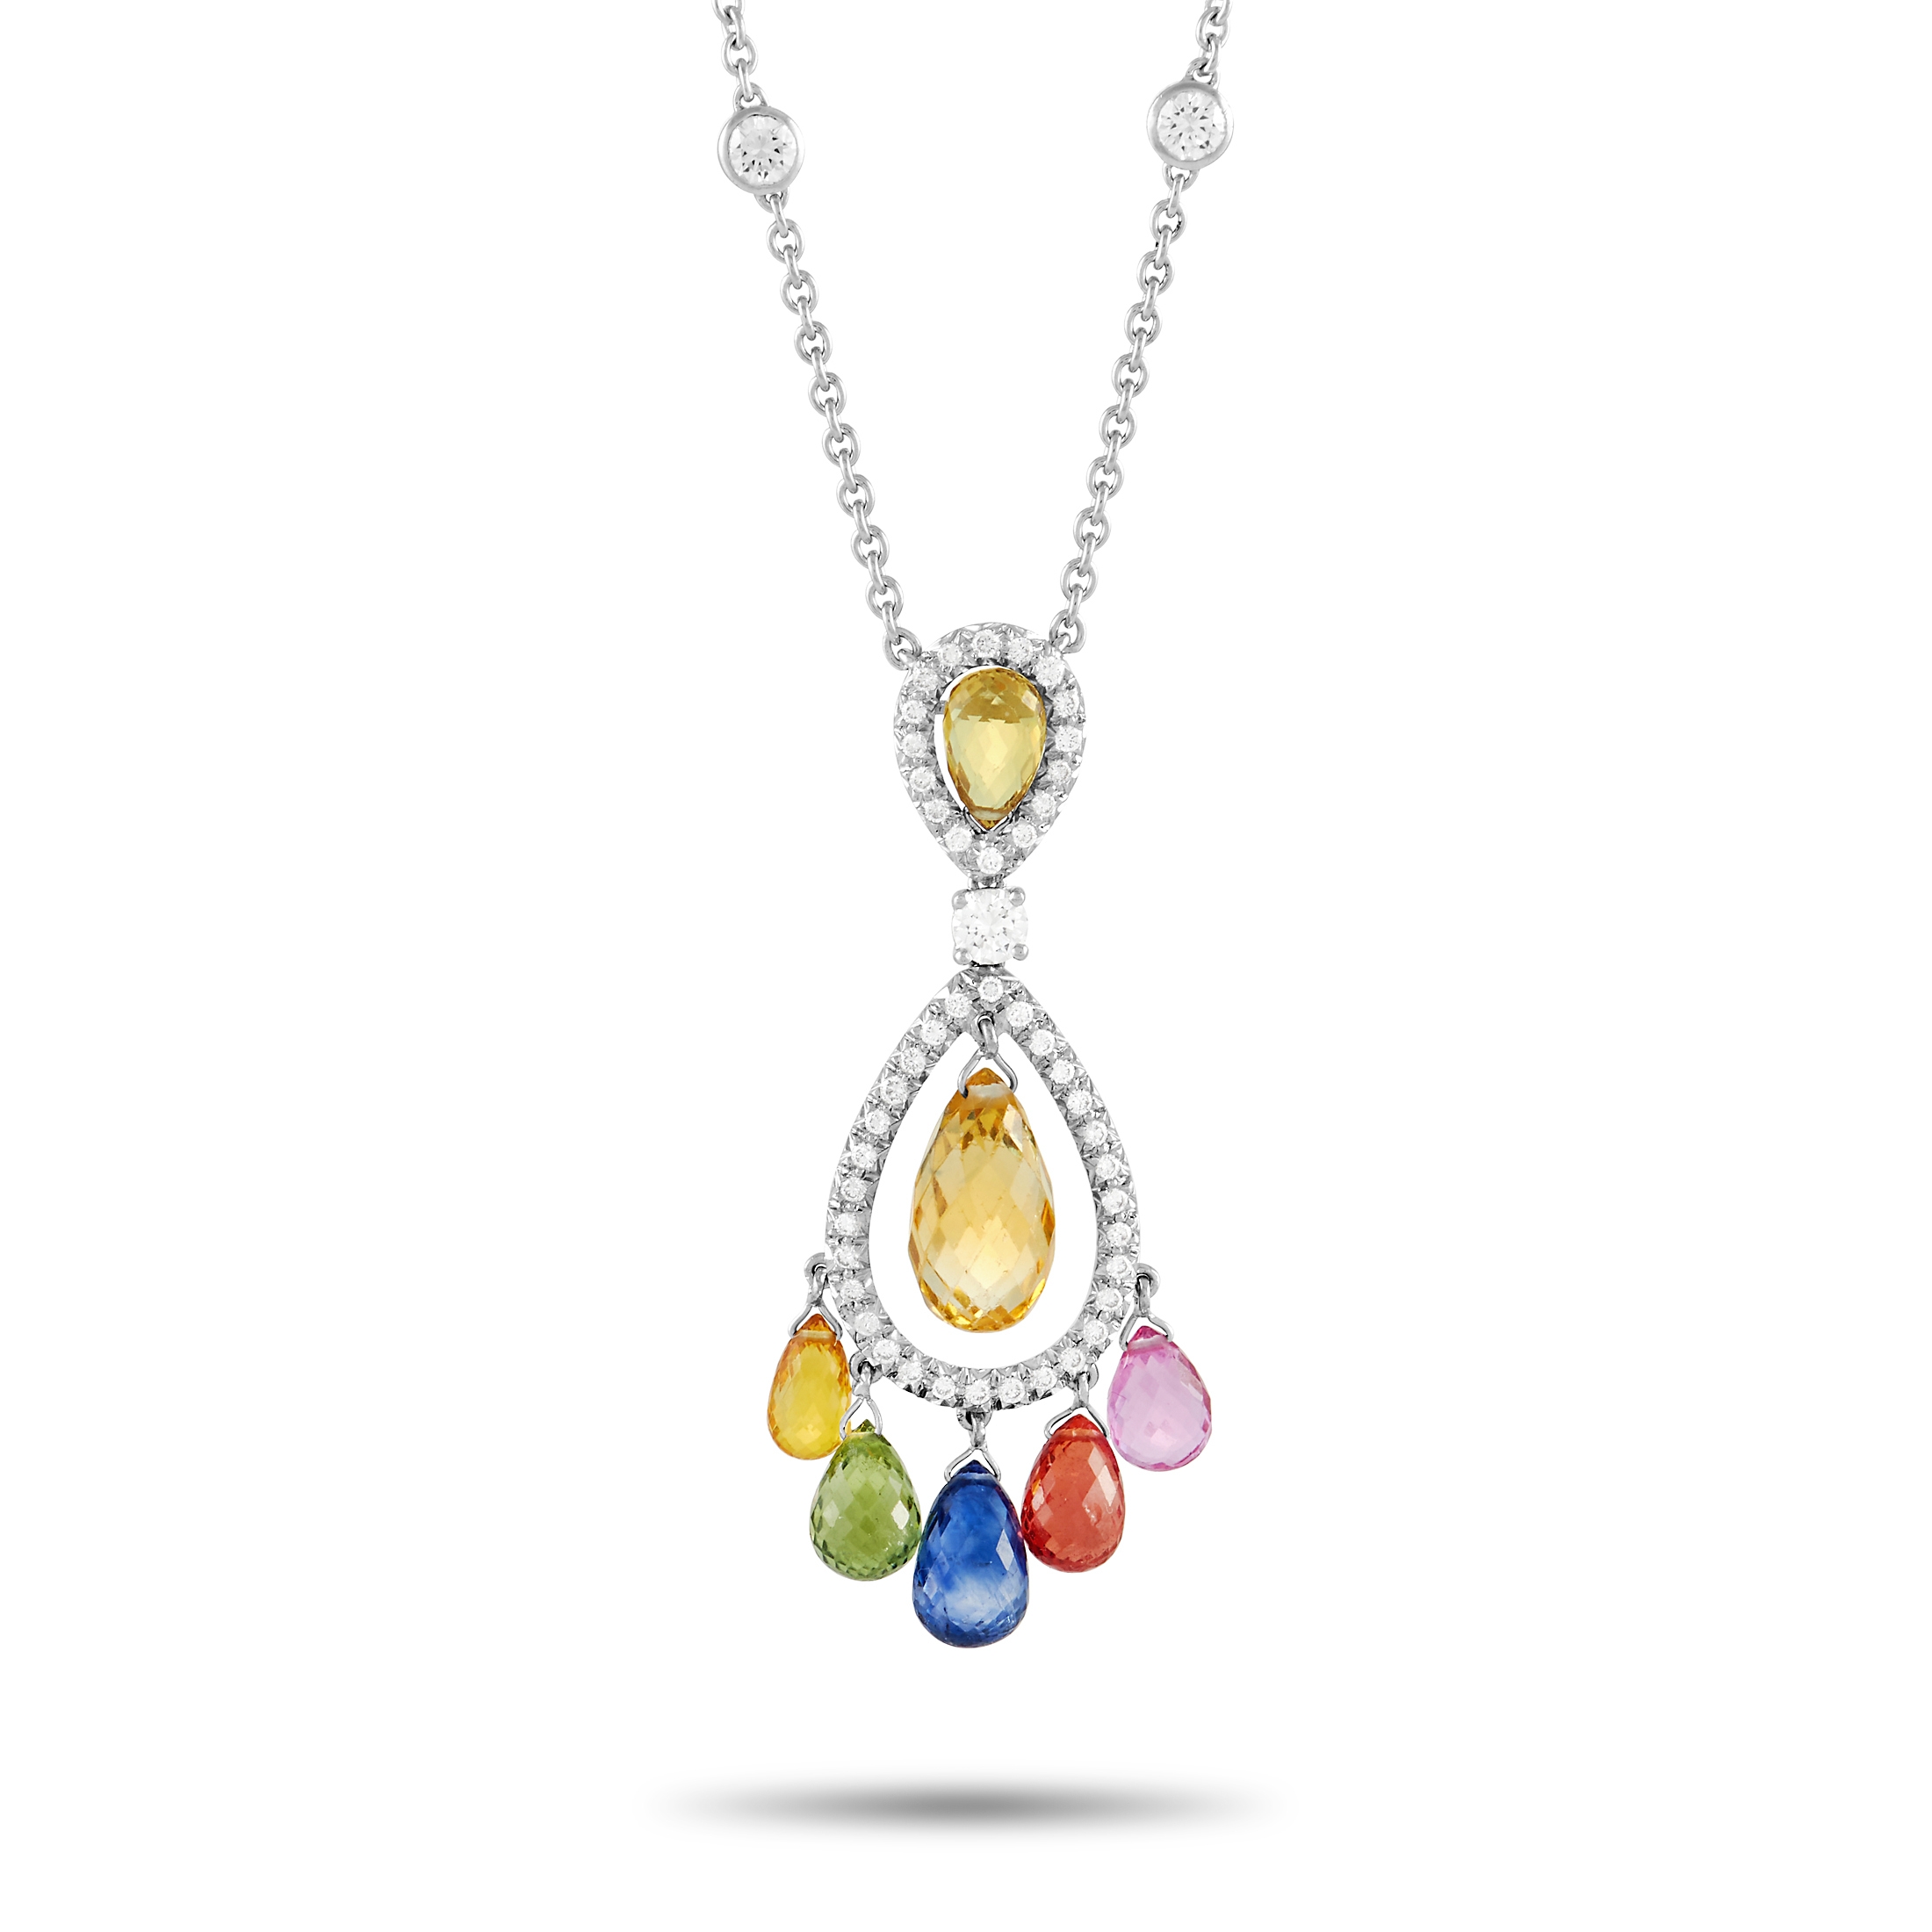 Cellini 18 Karat Gold, 10.28 Carat Pink Sapphire and 4.29 Carat Diamond  Necklace